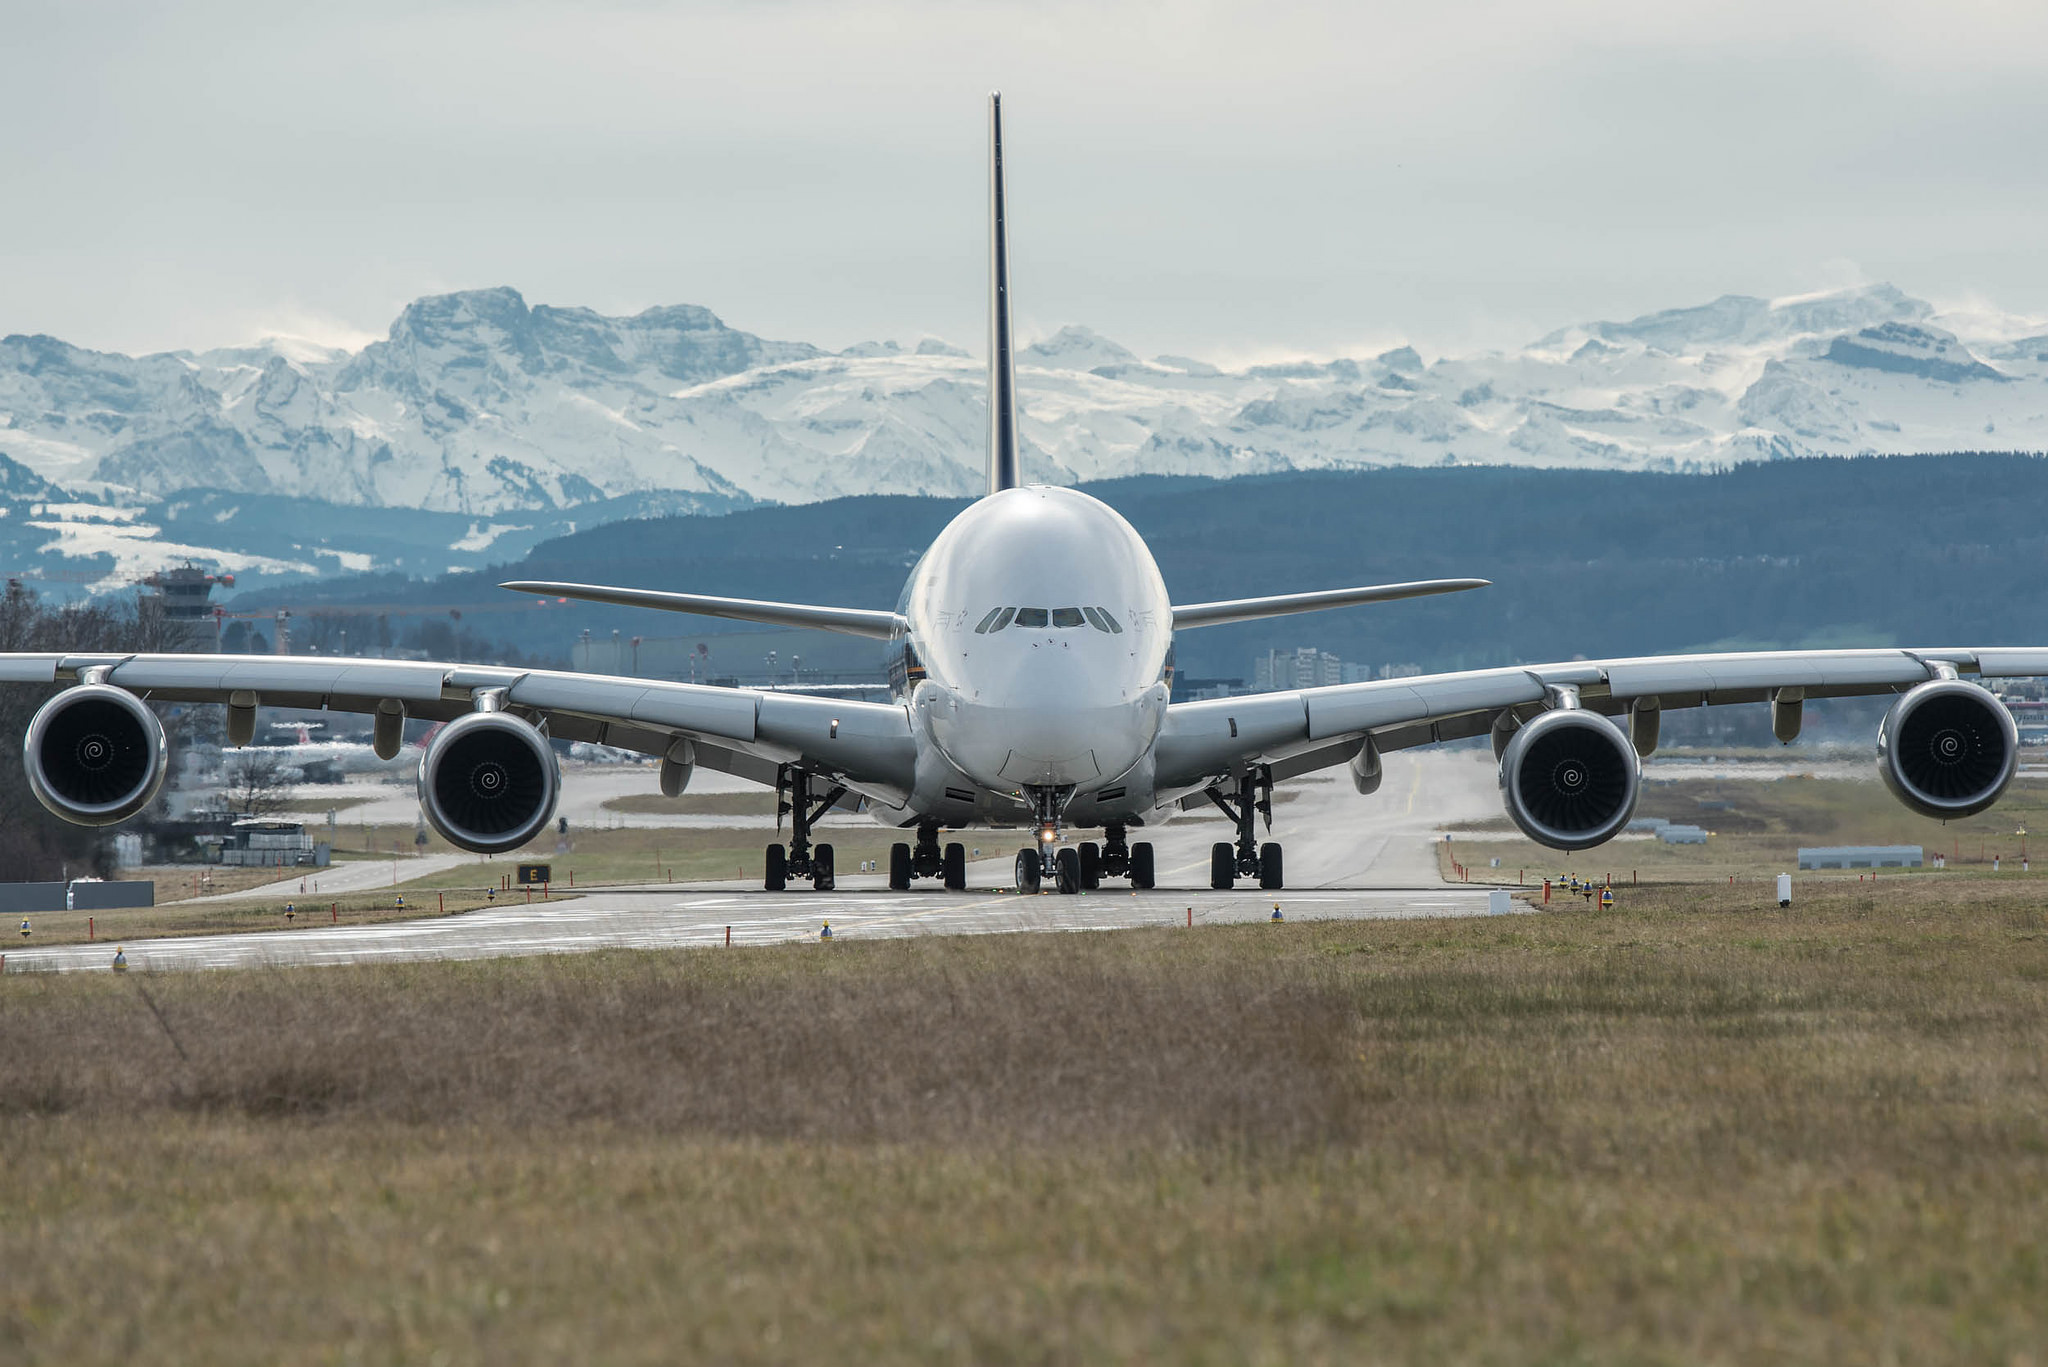 Airbus A380 HD Wallpaper